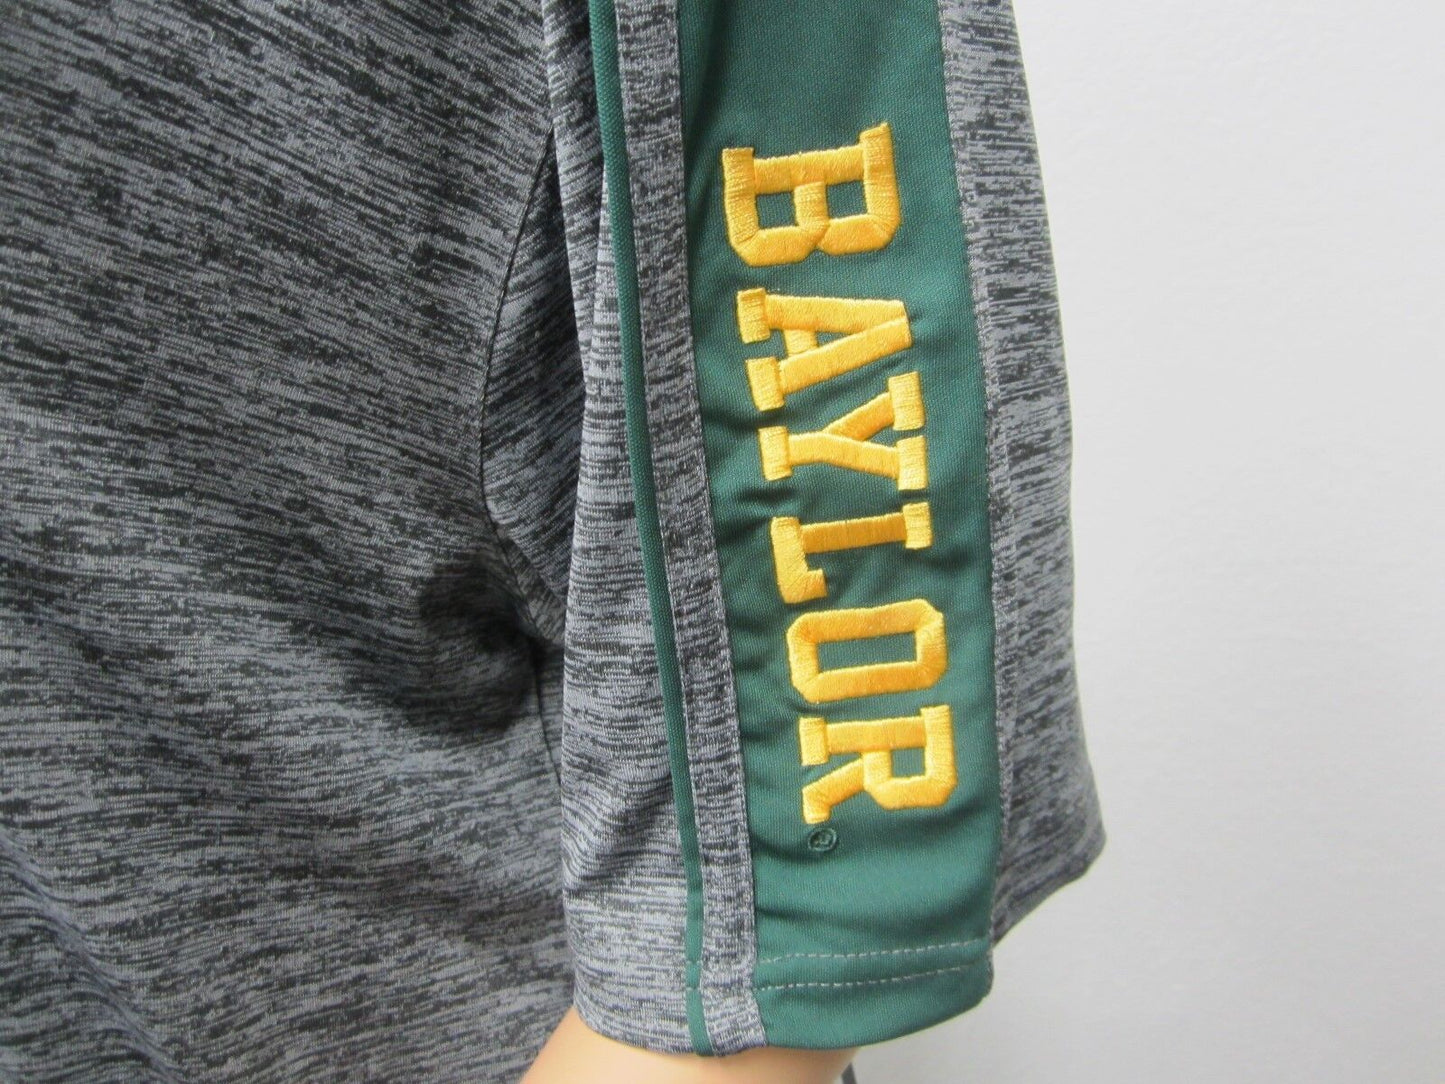 NEW Baylor University  Mens Small Logo Polo Shirt NWT Stadium Athletics